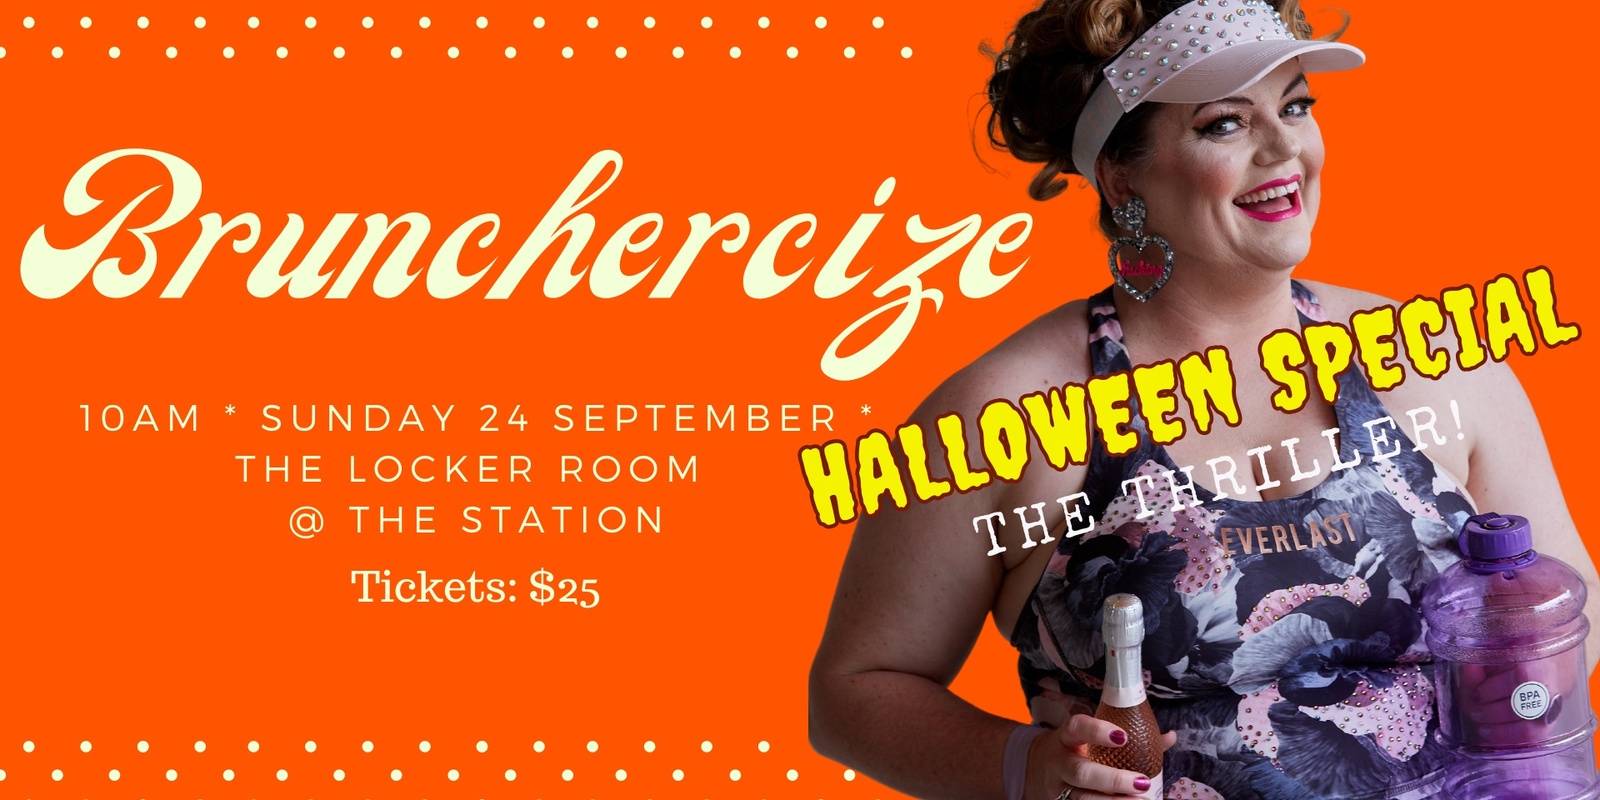 Banner image for Brunchercize Halloween Special - The Thriller